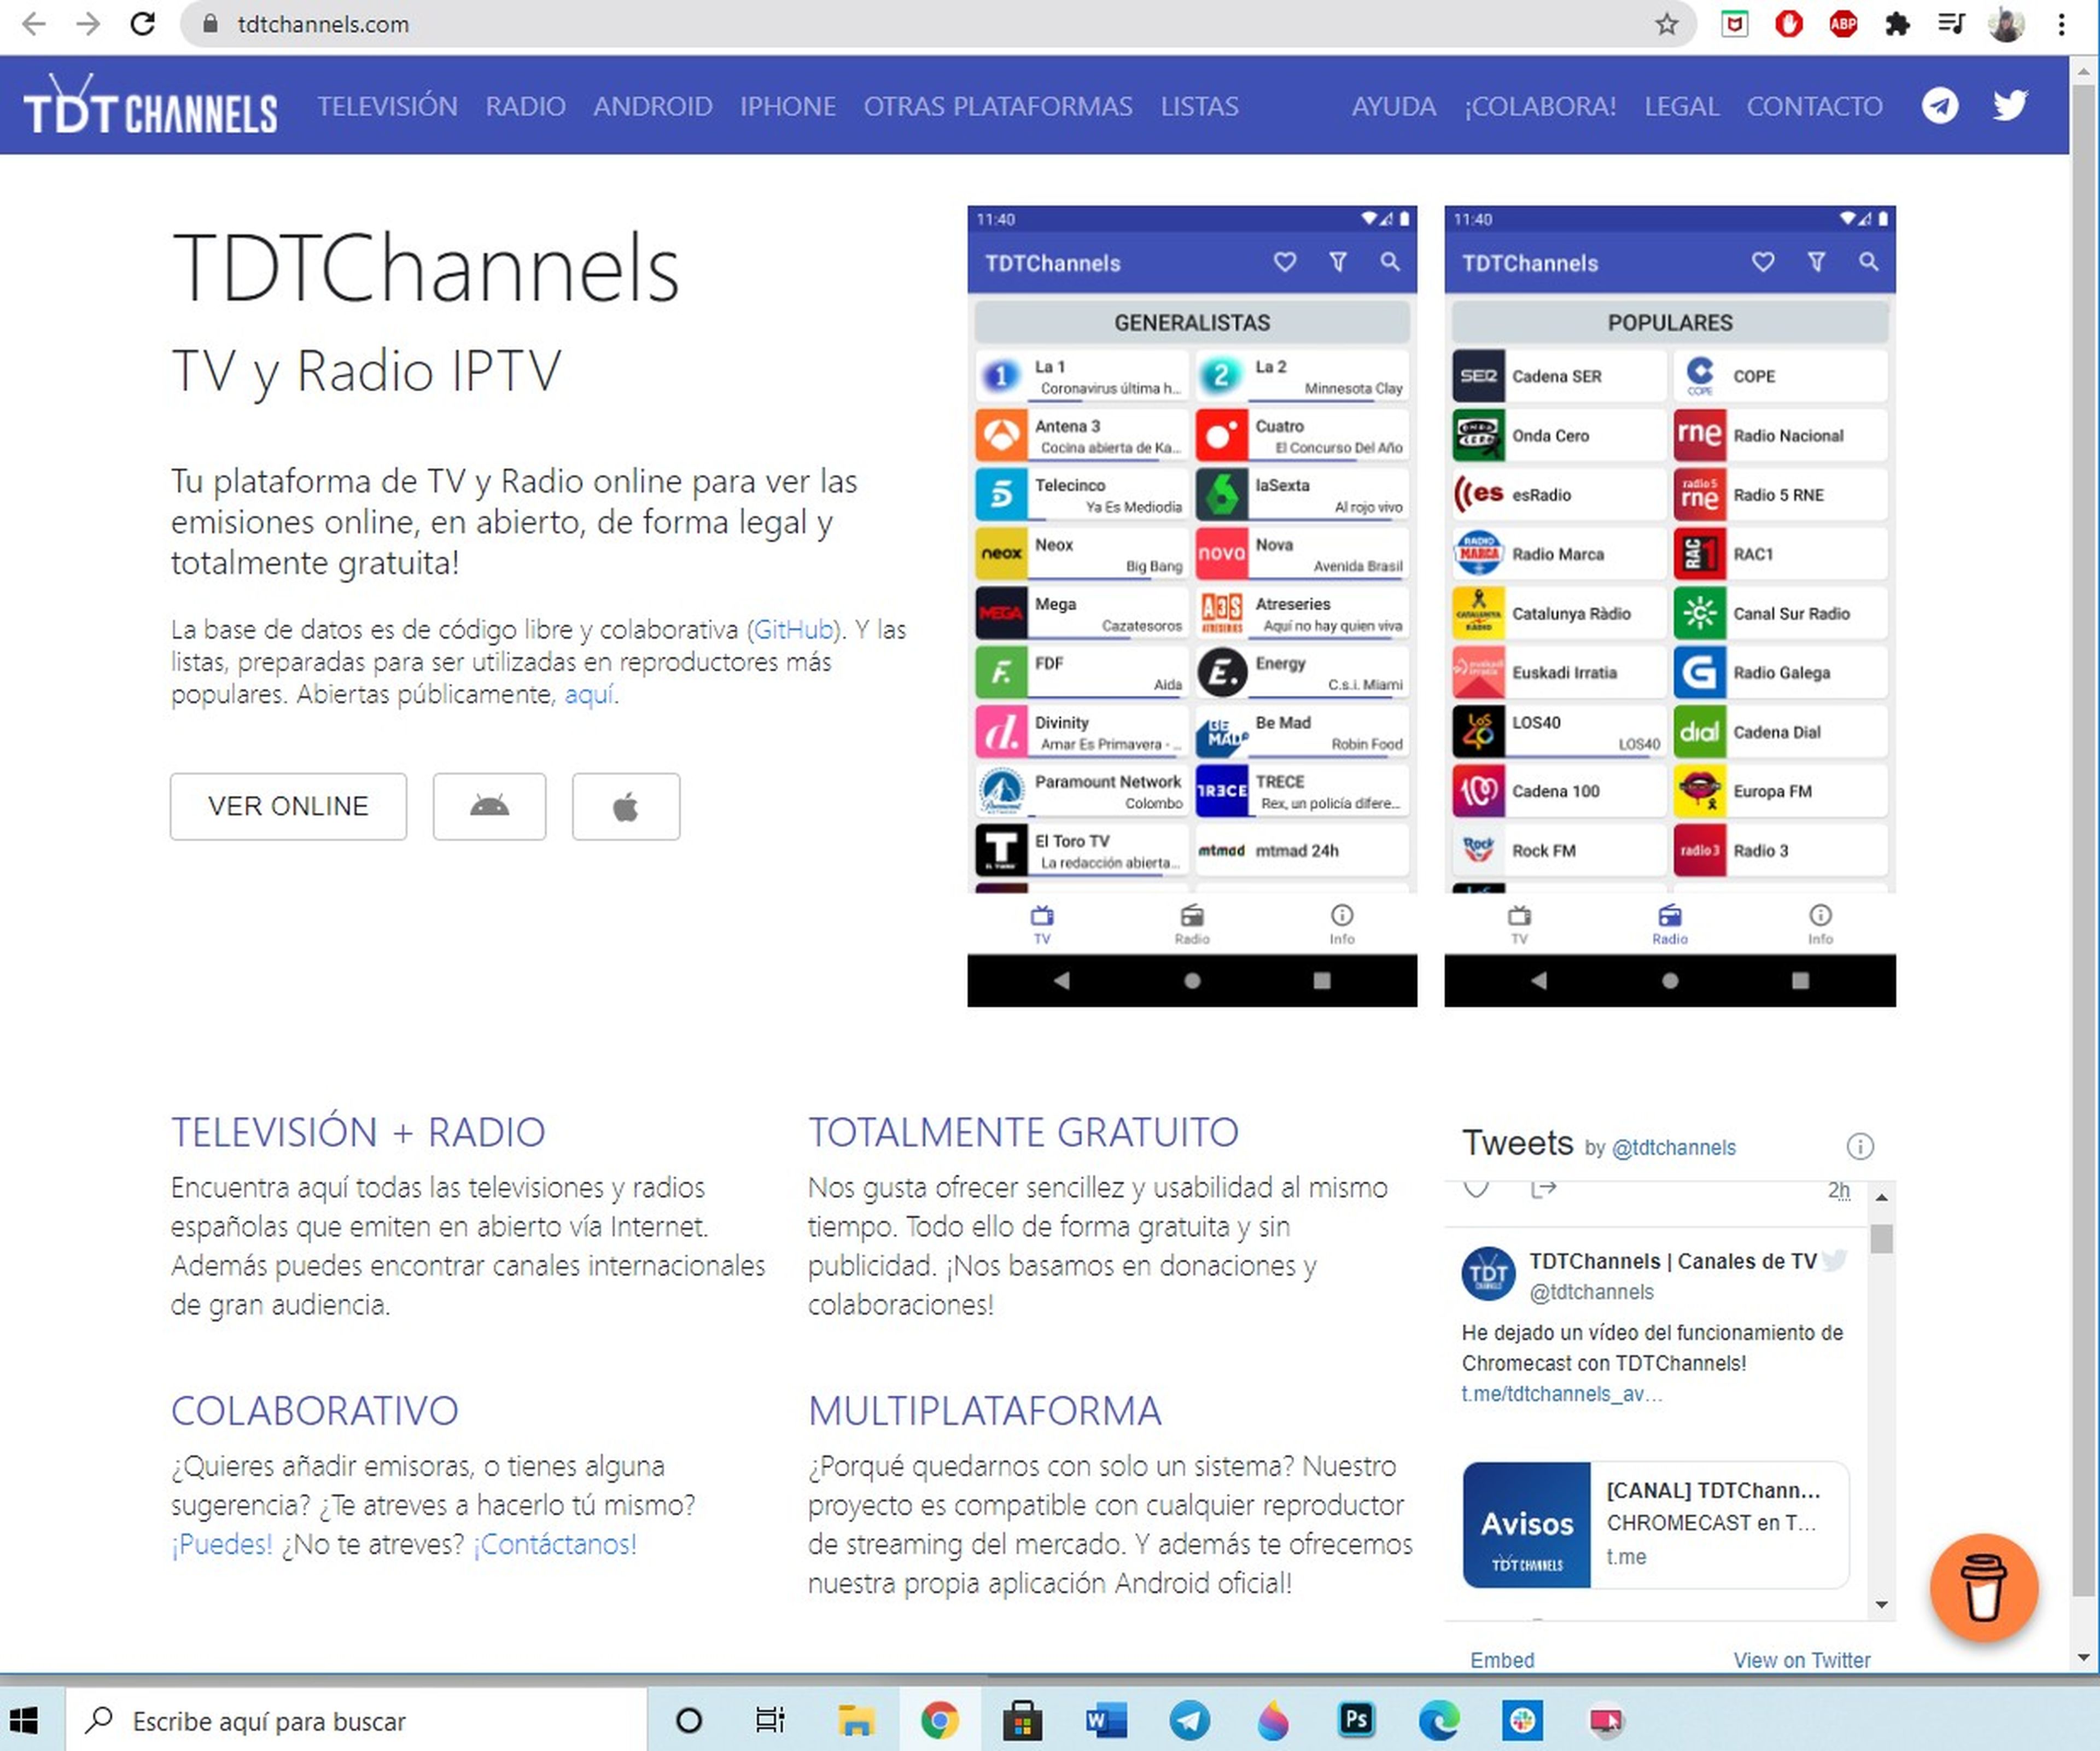 Ver la TDT online con TDTChannels